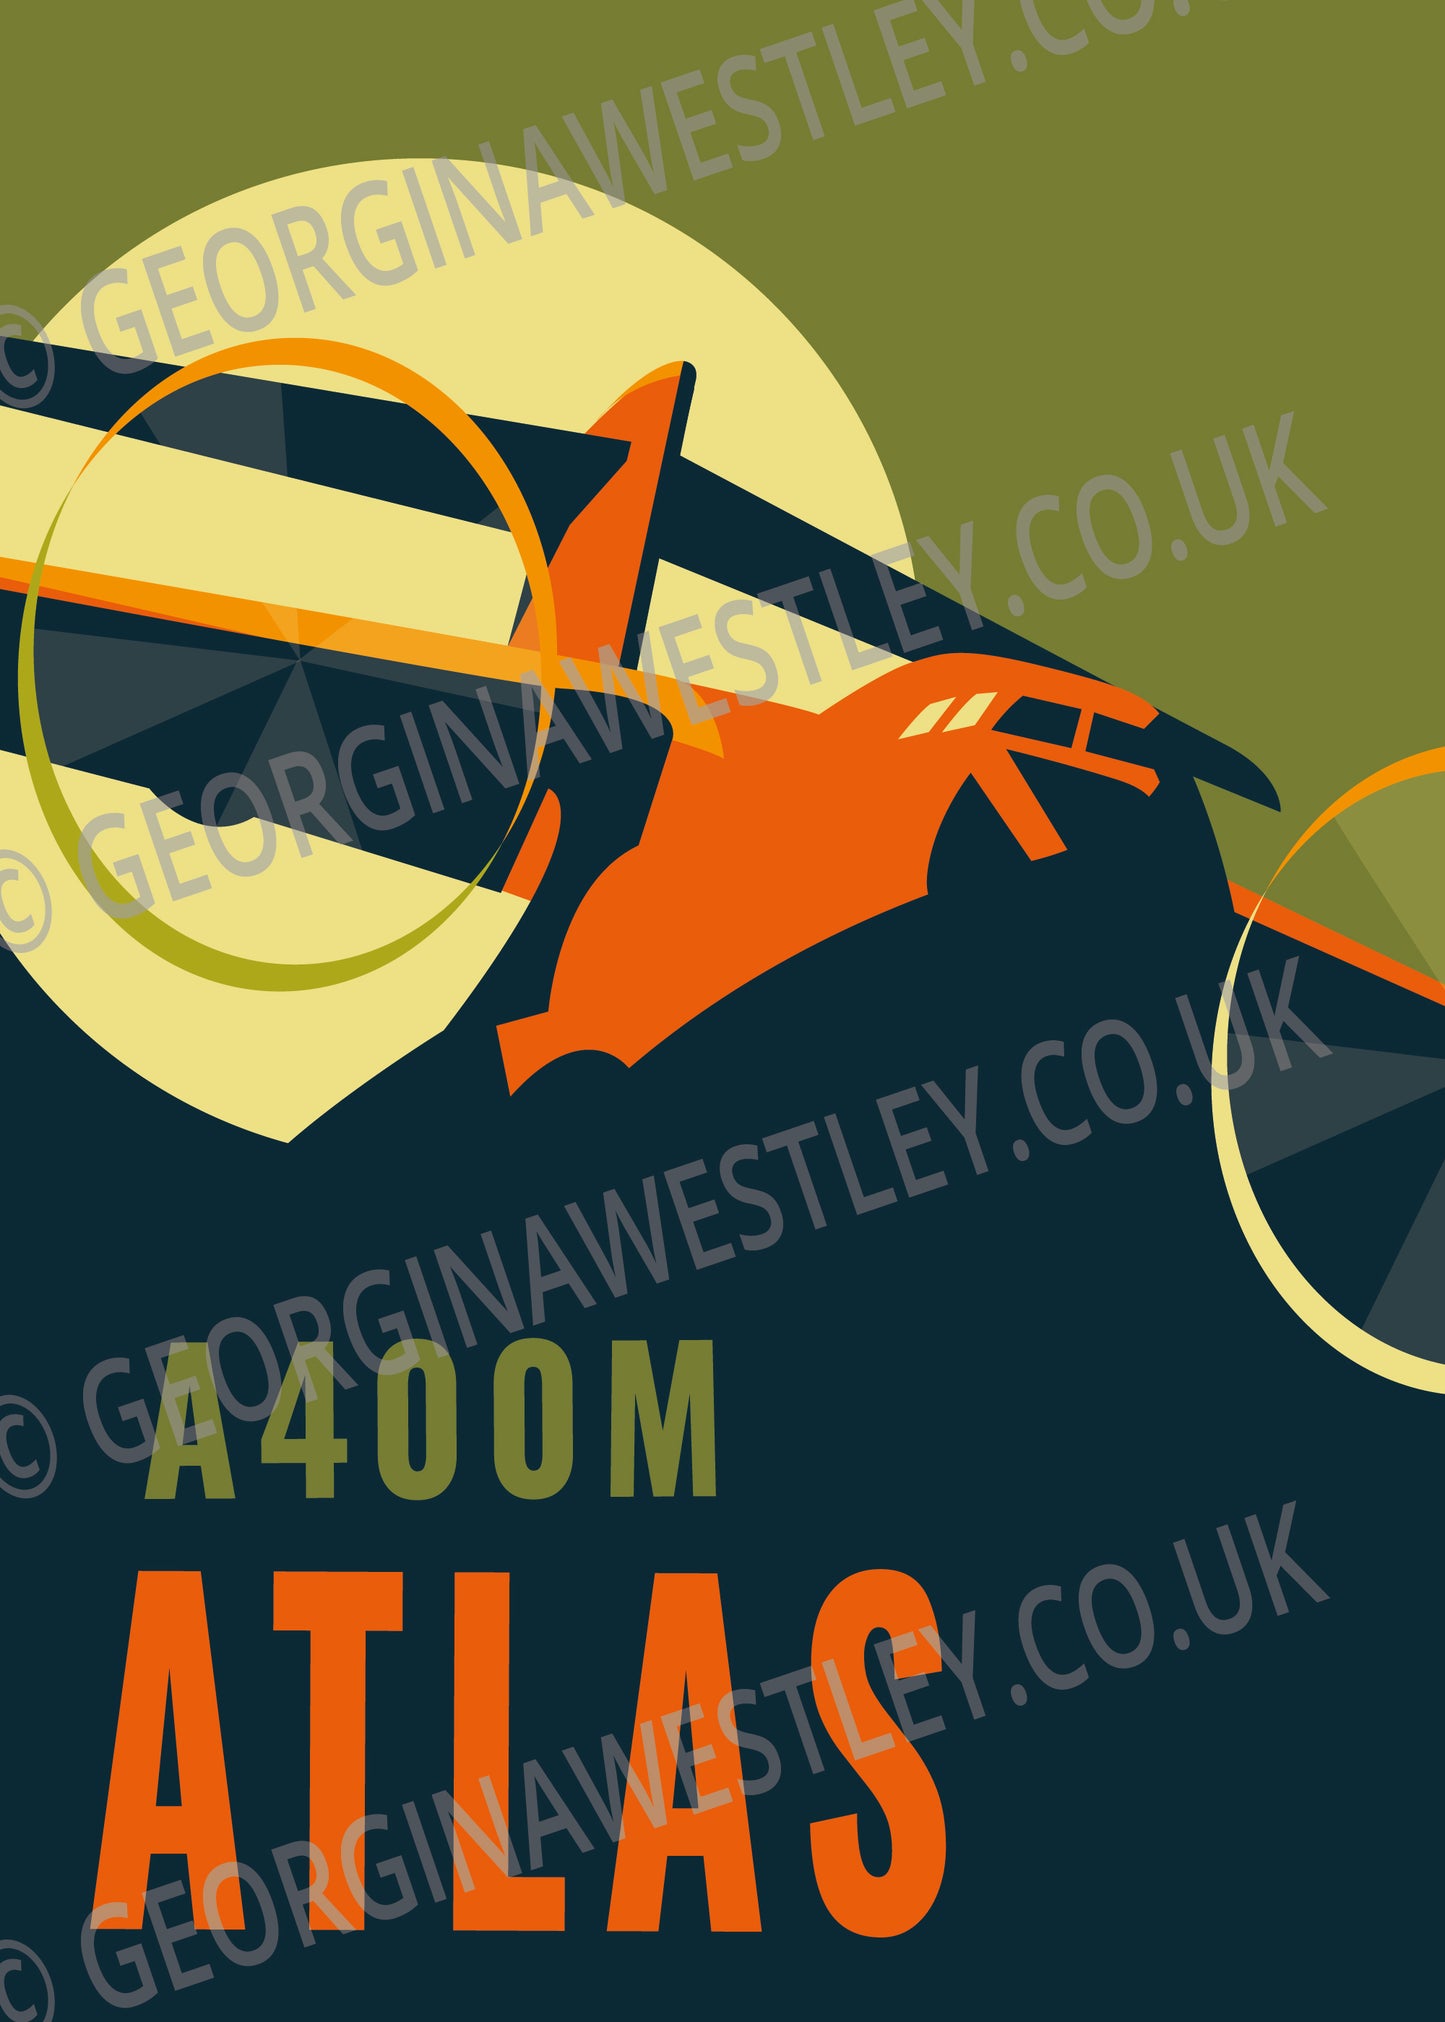 A400M Atlas